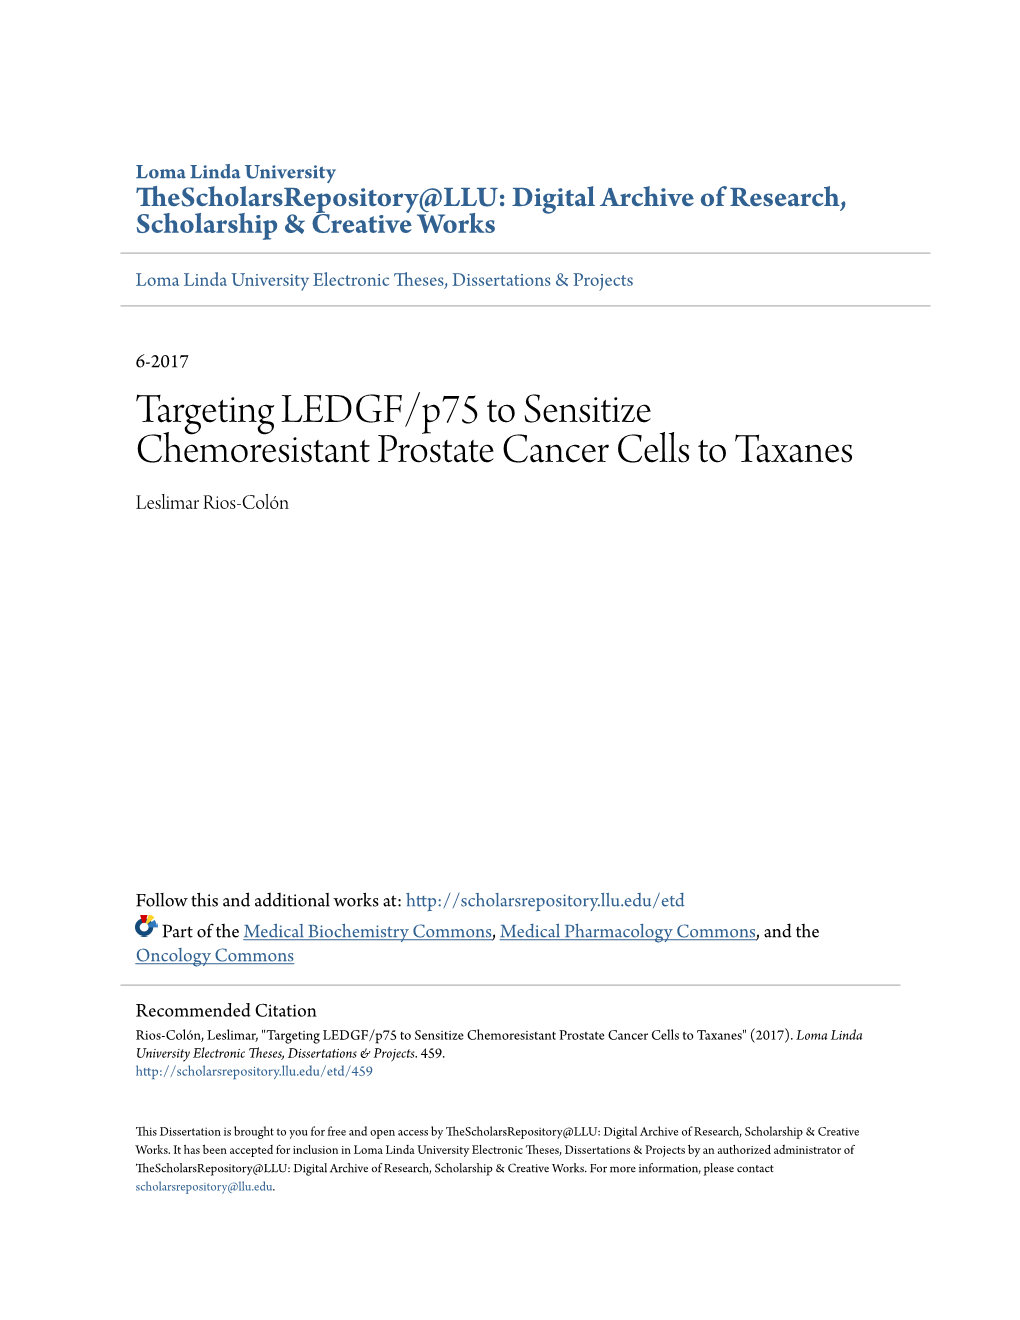 Targeting LEDGF/P75 to Sensitize Chemoresistant Prostate Cancer Cells to Taxanes Leslimar Rios-Colón